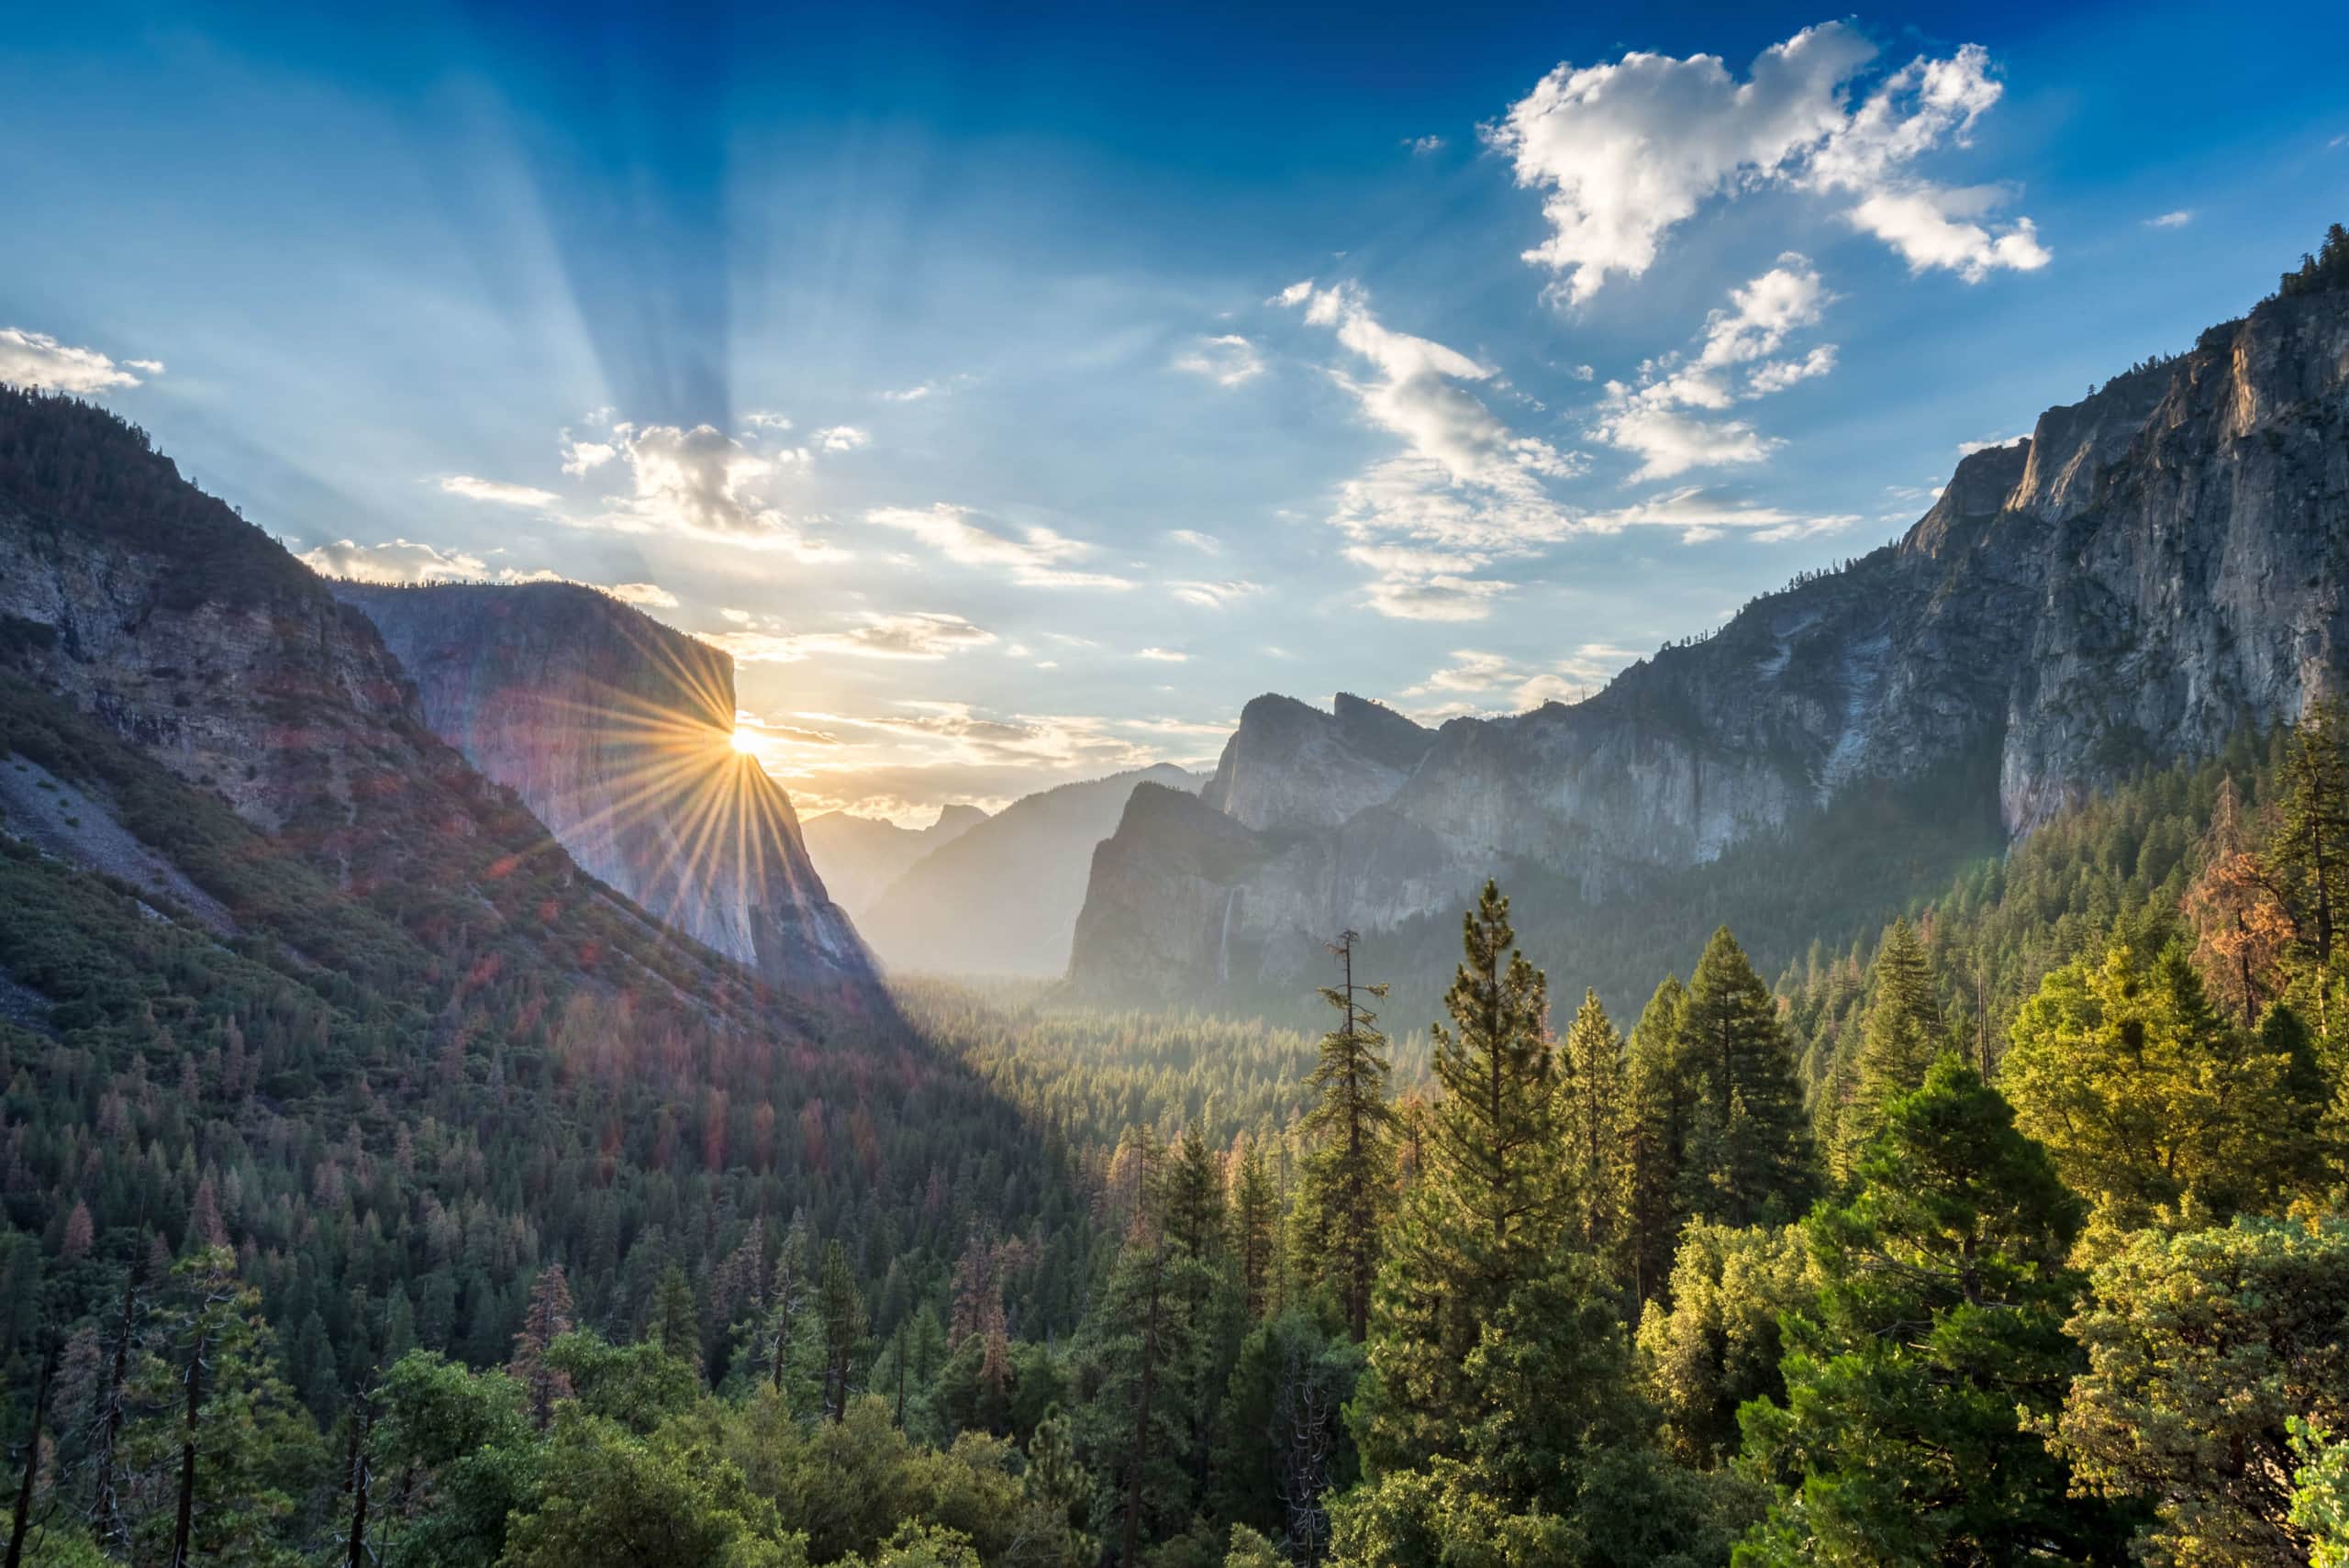 Sunrise at Yosemite National Park